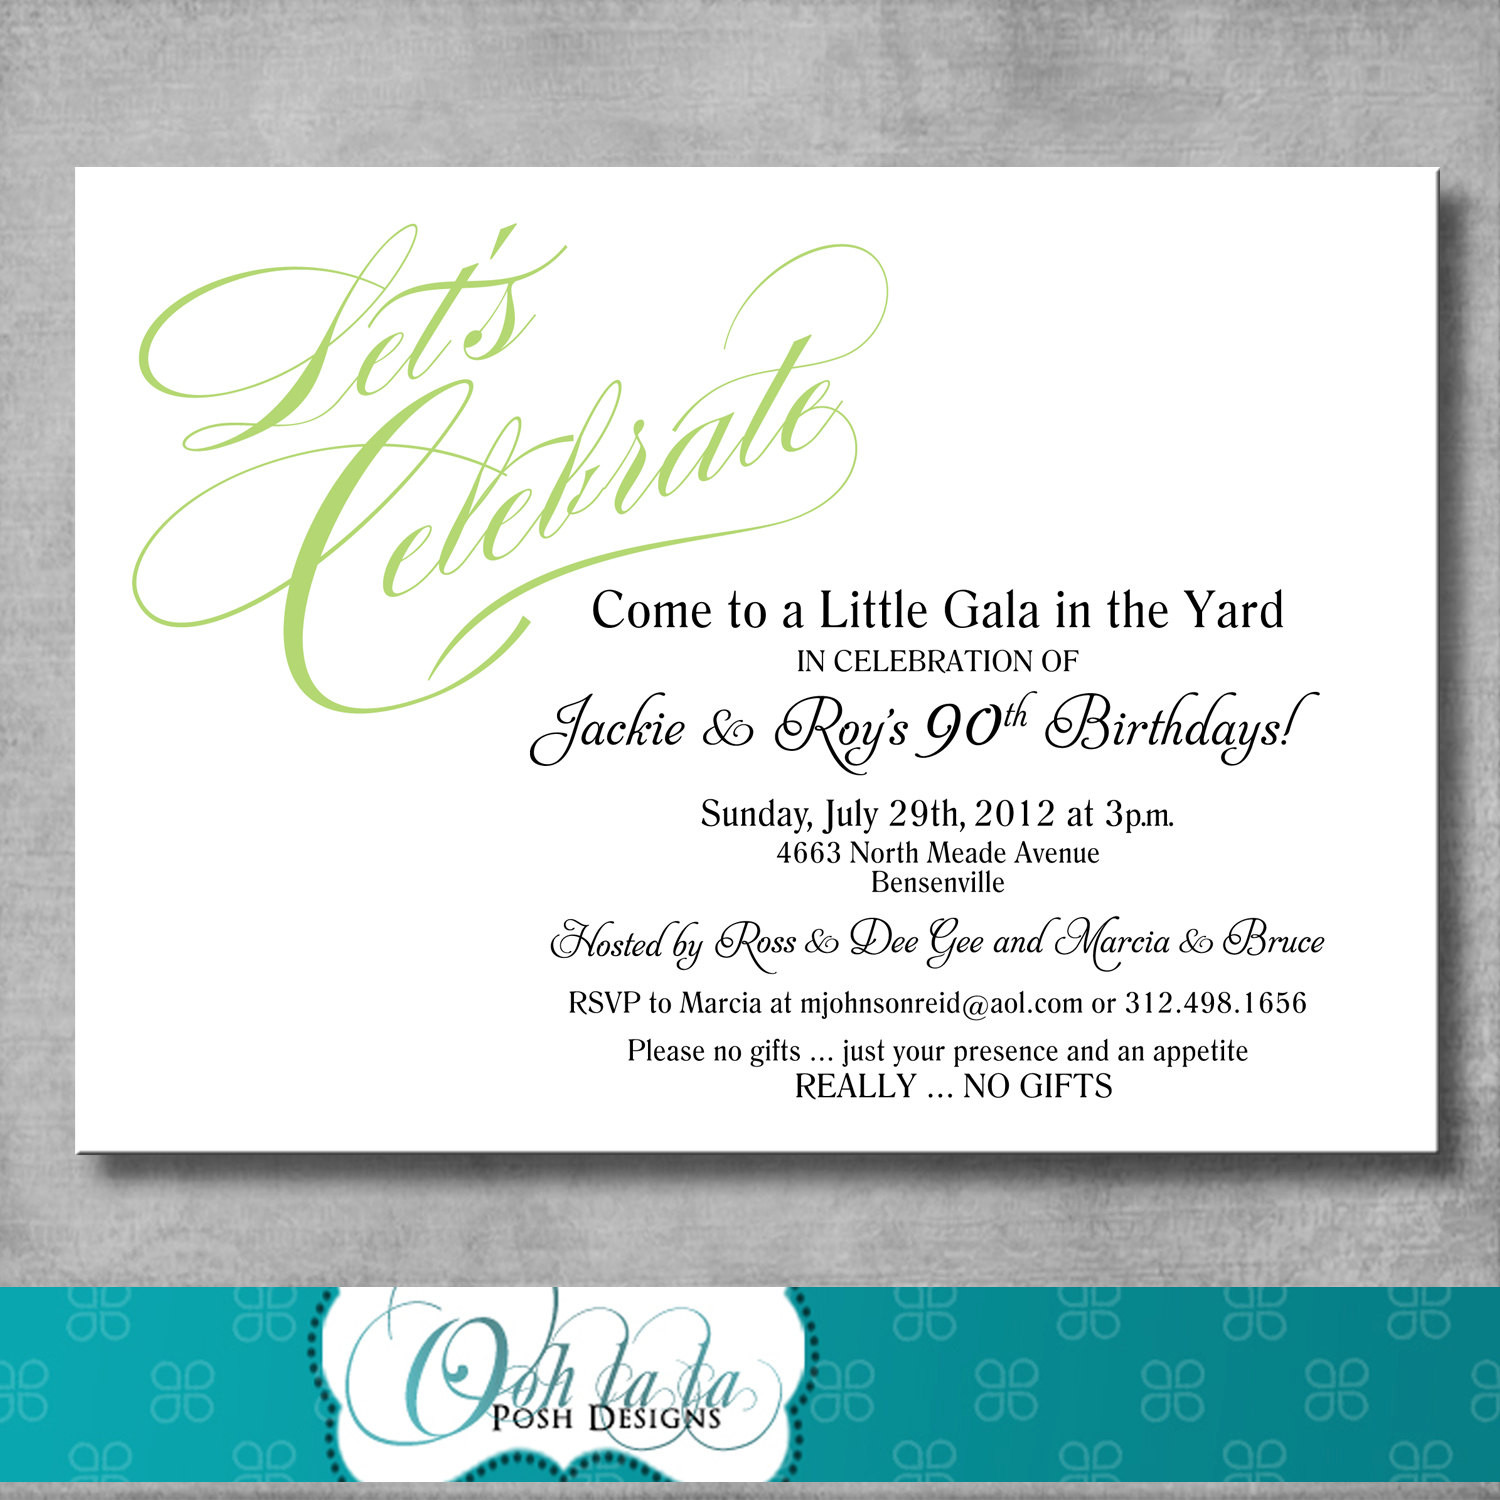 Adult Birthday Party Invitations
 Printable Adult Birthday Party Invitation DIY CUSTOMIZABLE